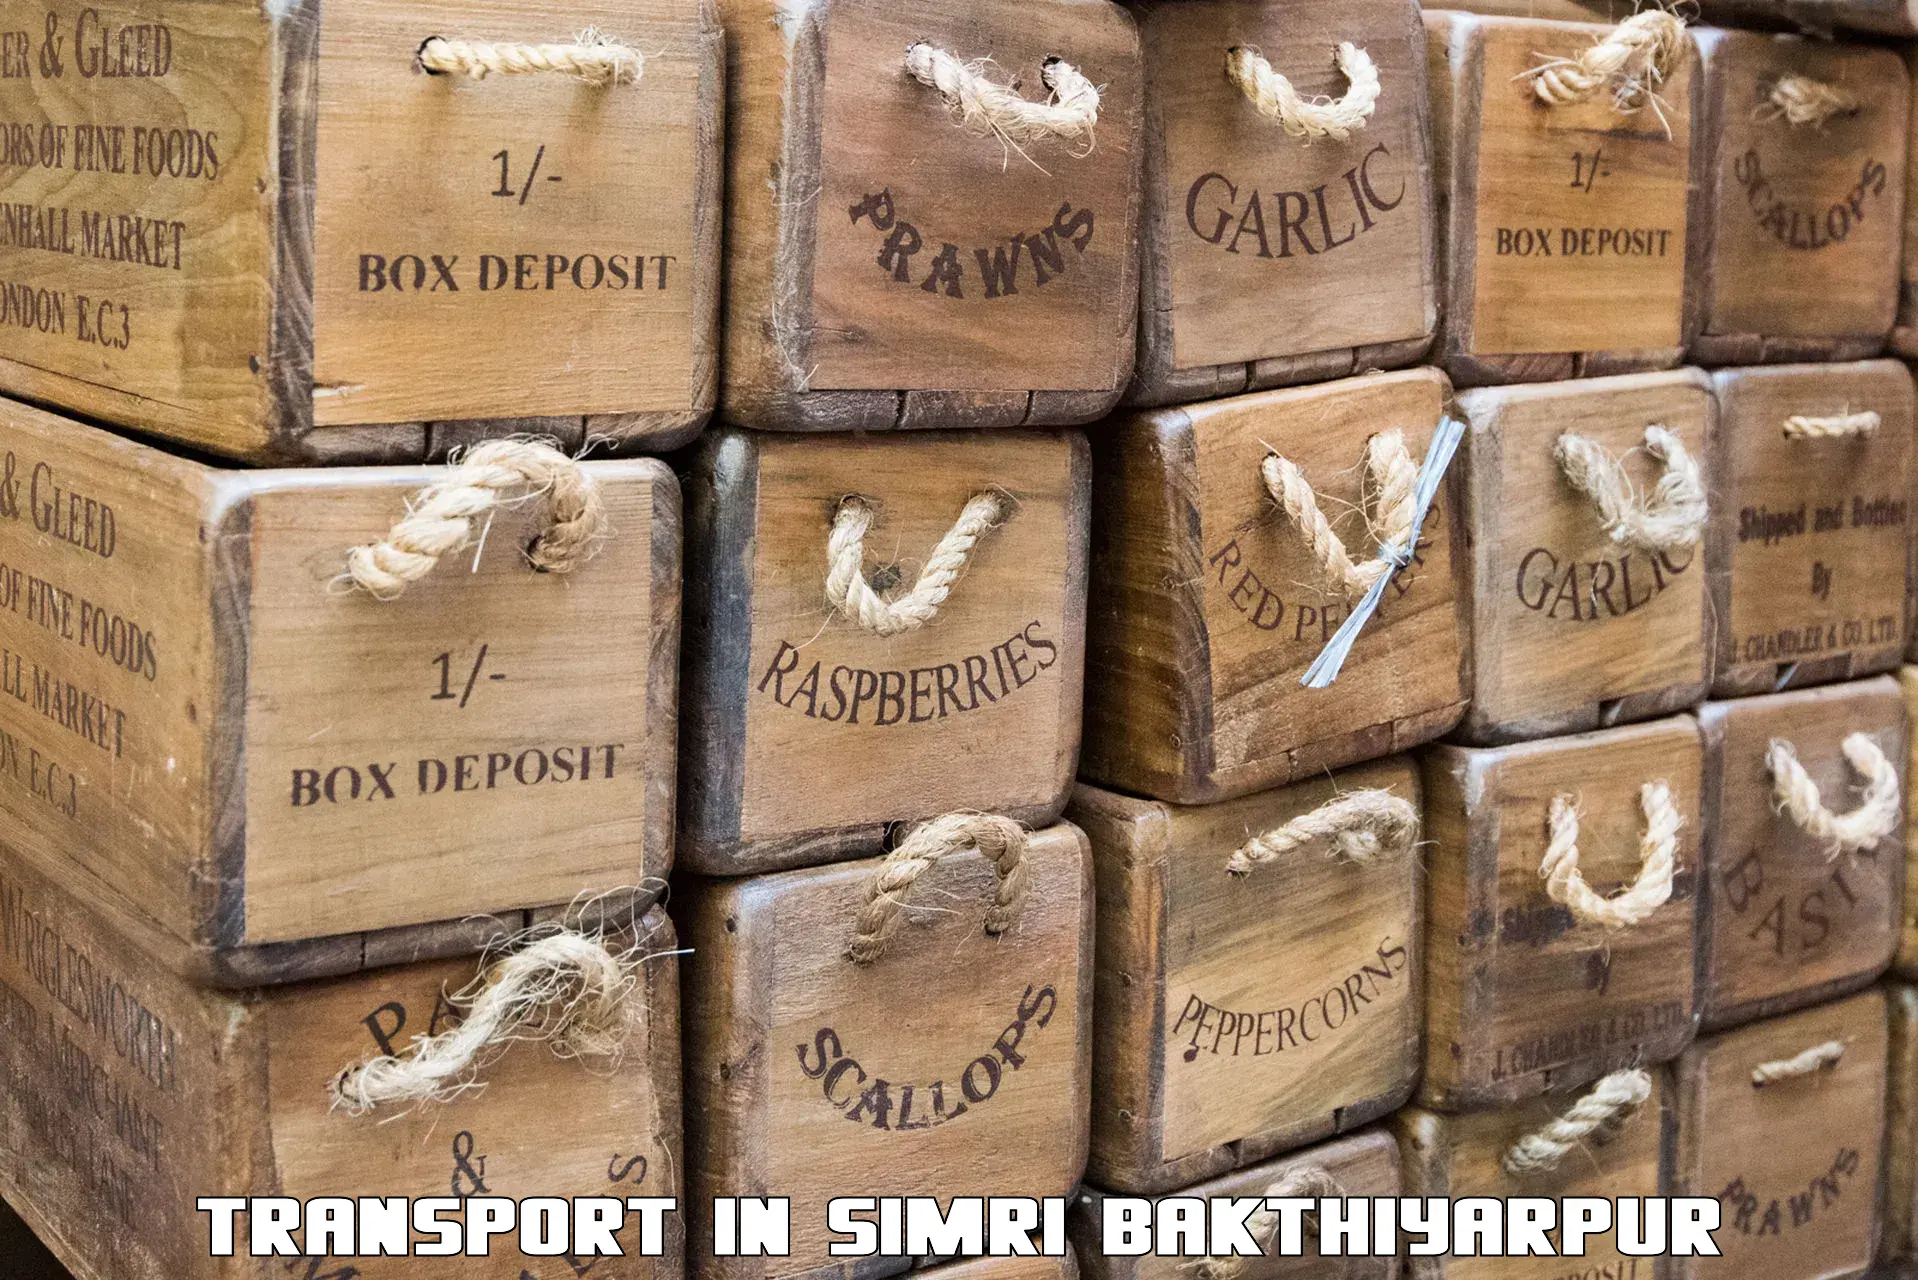 Daily parcel service transport in Simri Bakthiyarpur